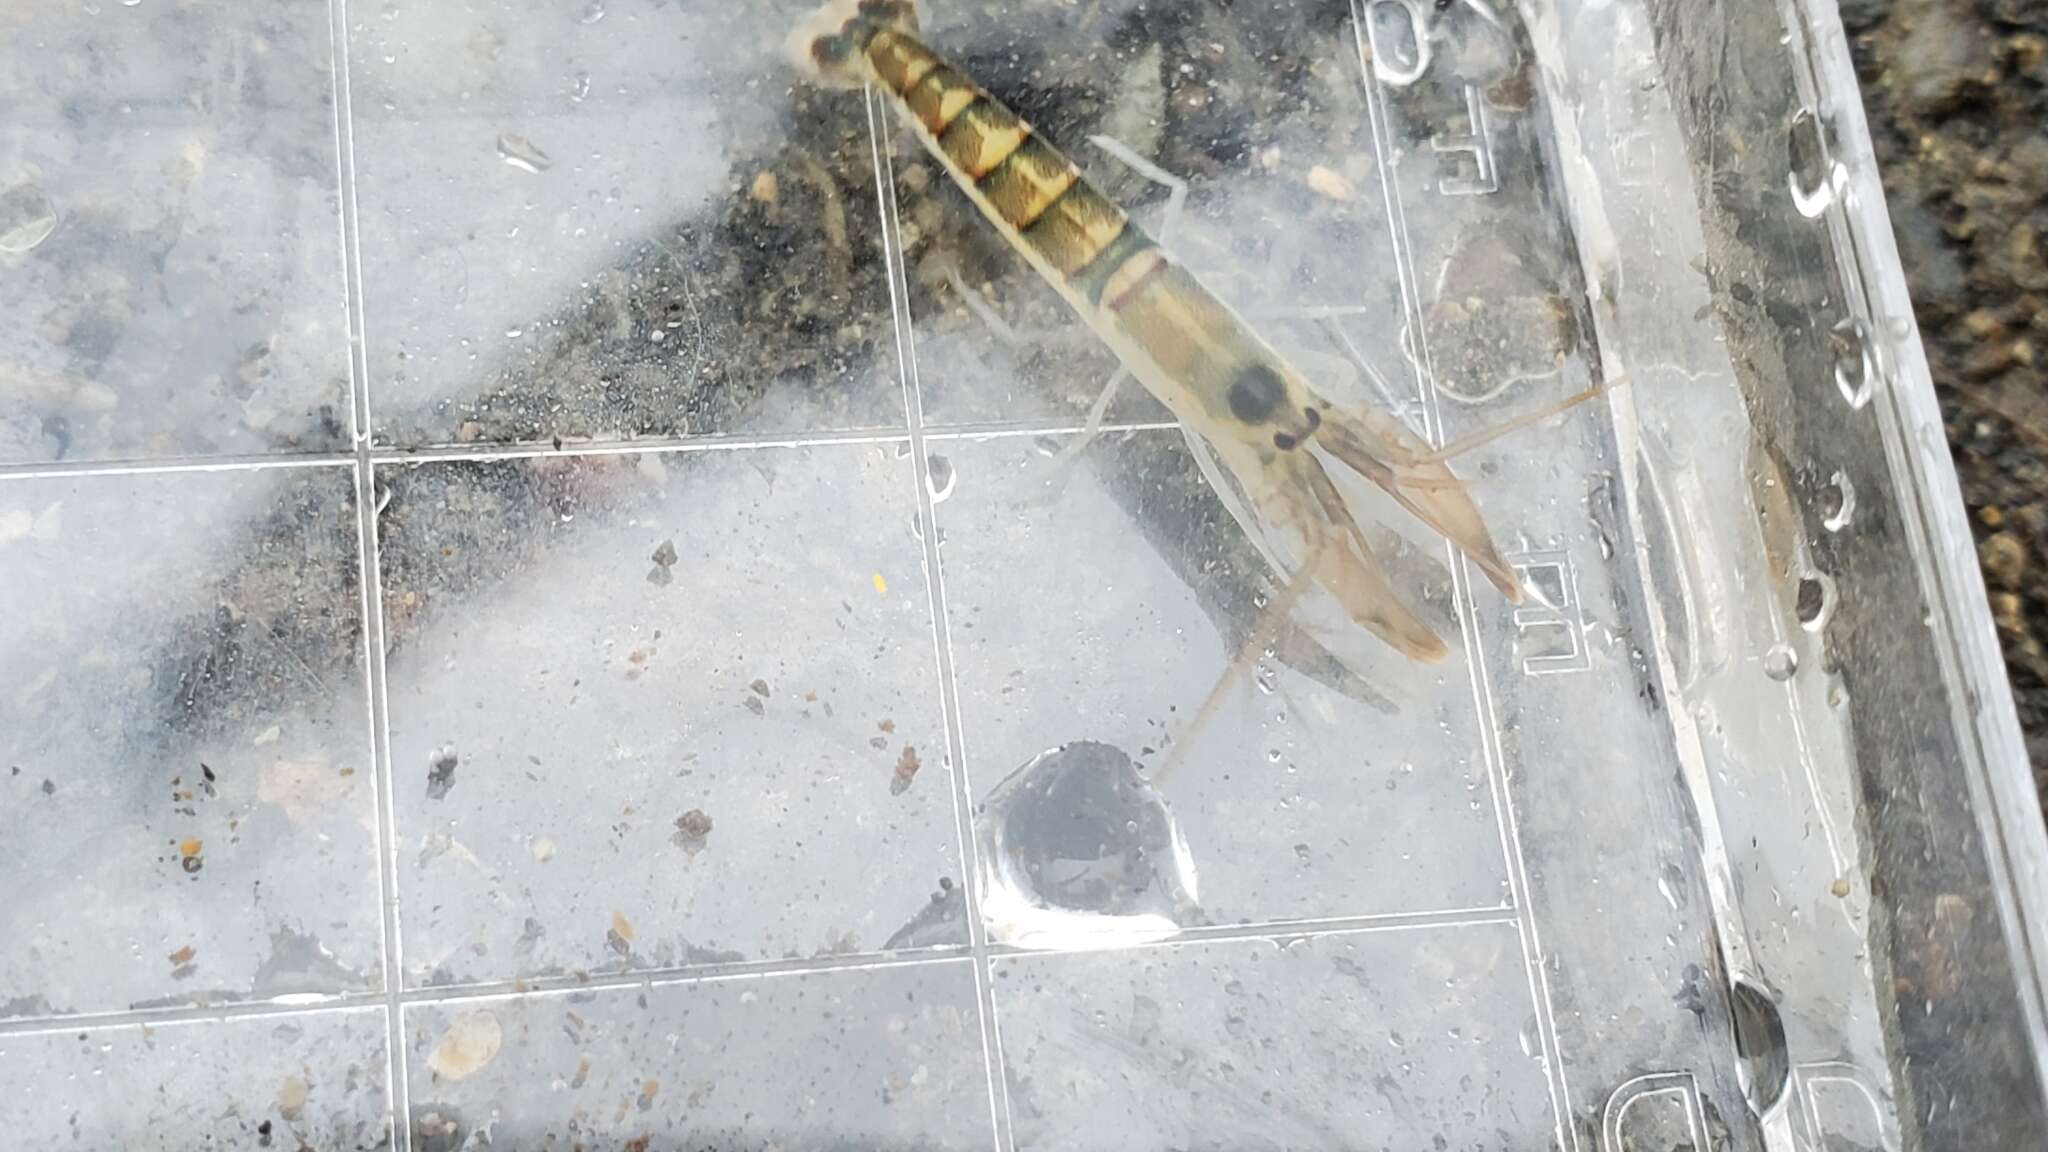 Image of northern hooded shrimp